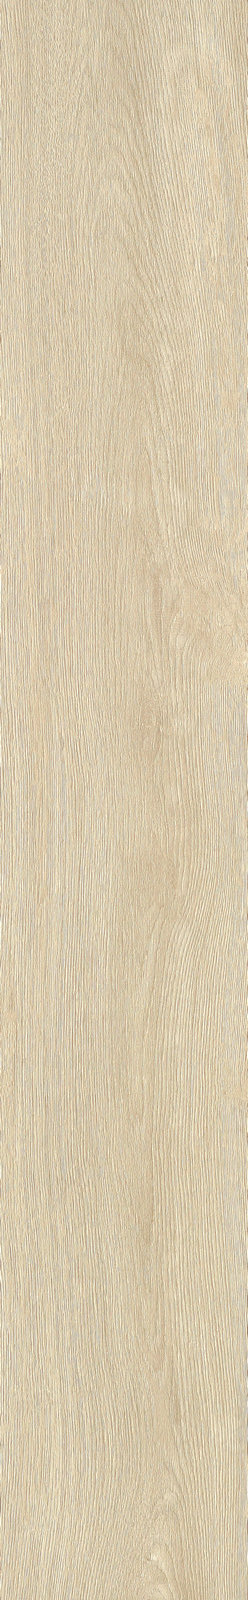 122FW111B 橡心悦木产品图